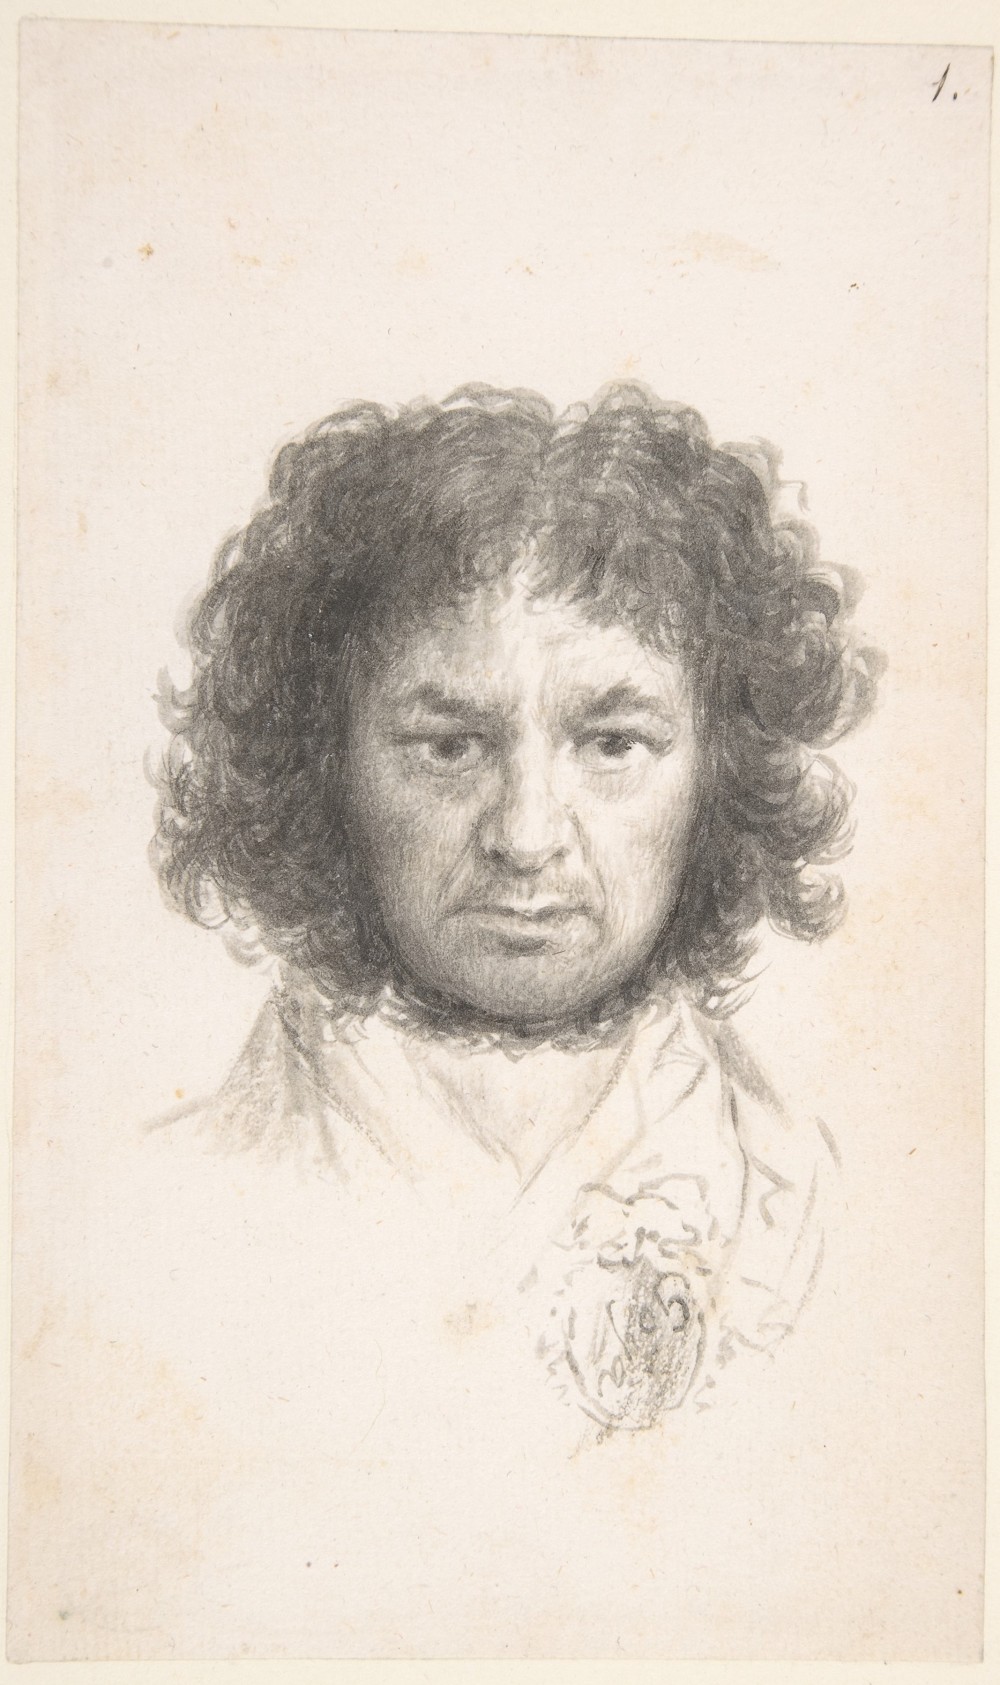 《自画像》（Self-Portrait），戈雅，约1795-1797年